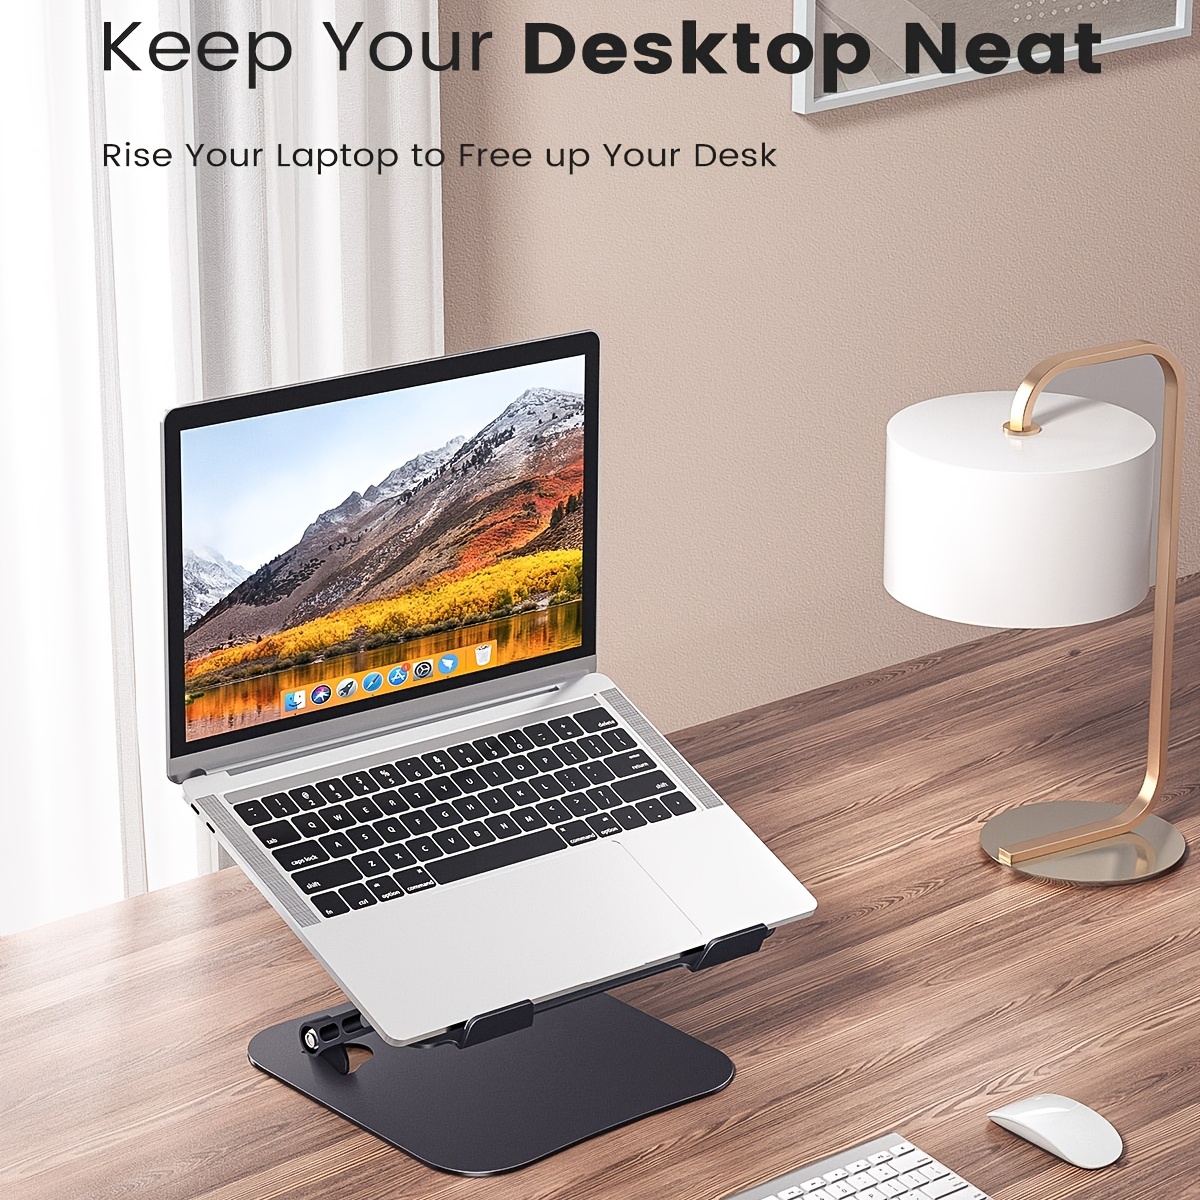 KOOTION Soporte para computadora portátil, soporte ajustable para  computadora portátil para escritorio, soporte de aluminio para computadora  portátil